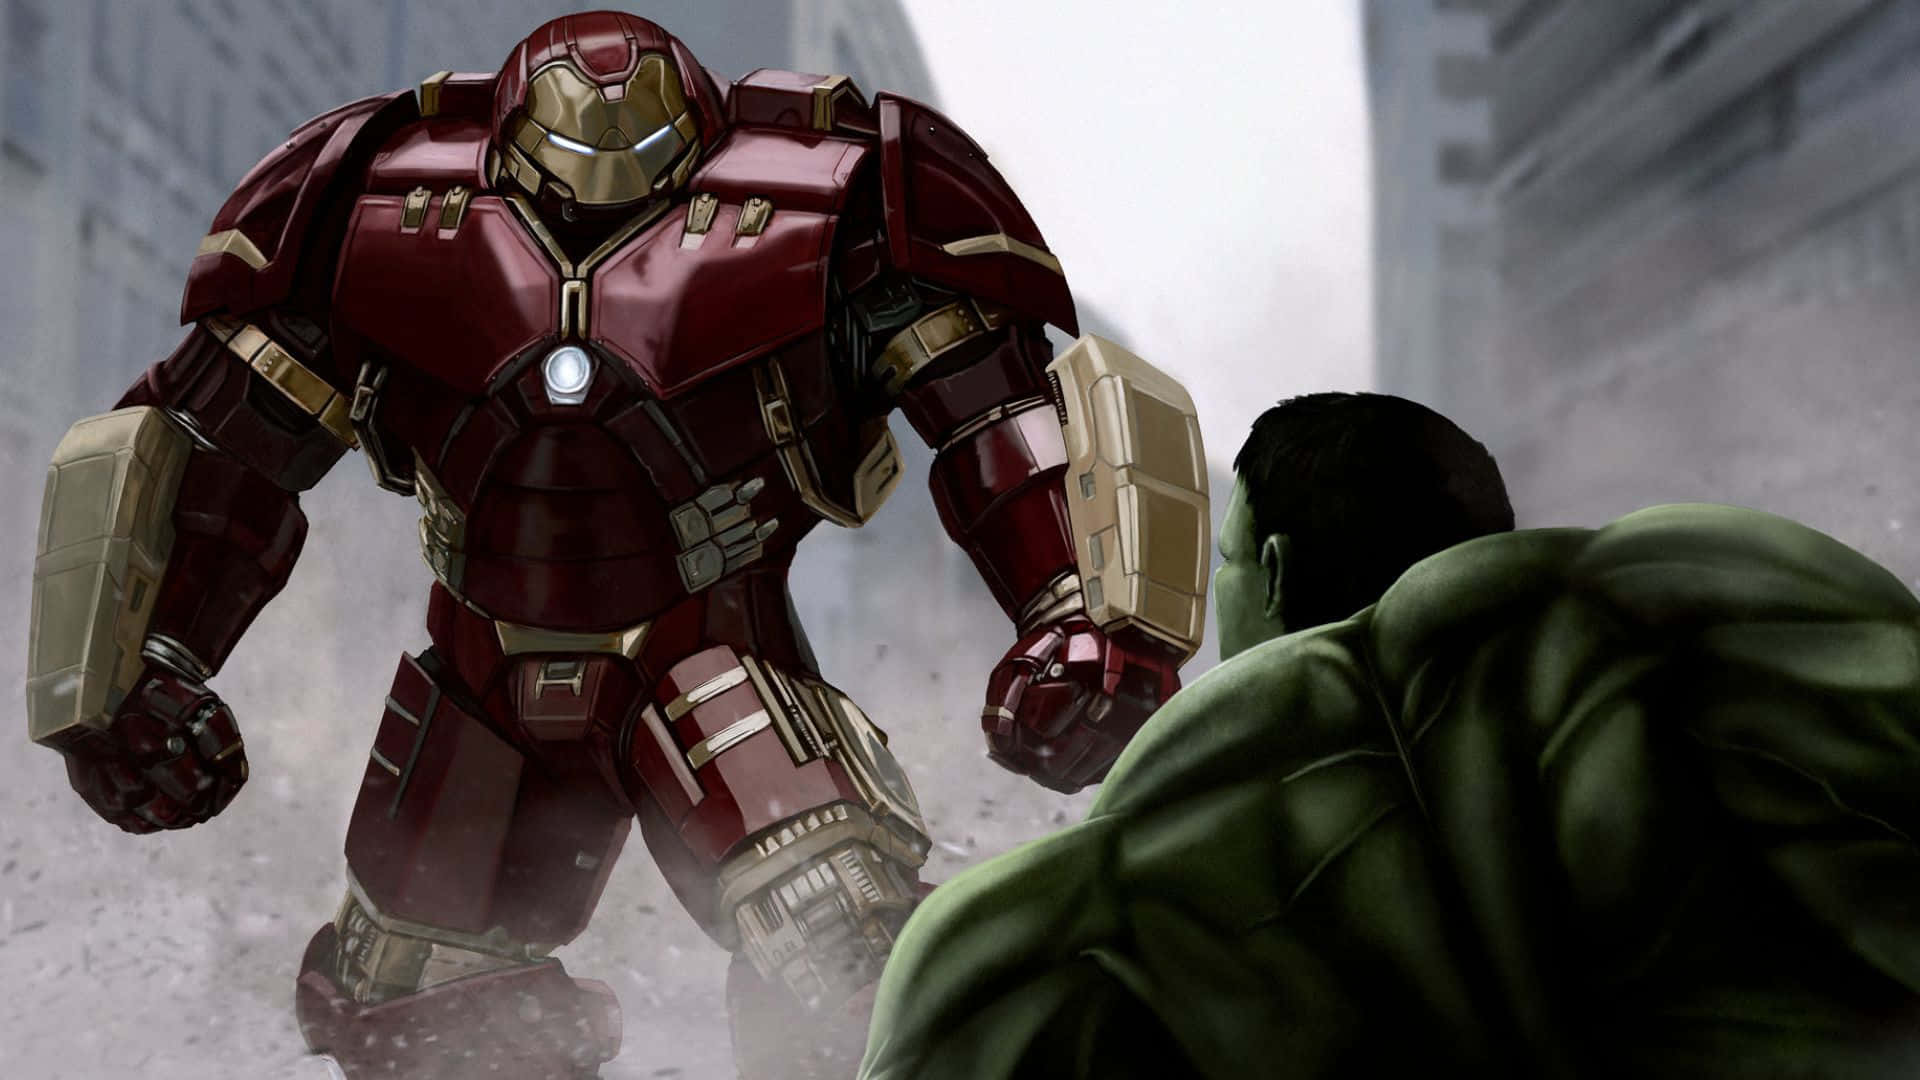 Who Will Triumph? - Iron Man vs. Hulk" Wallpaper